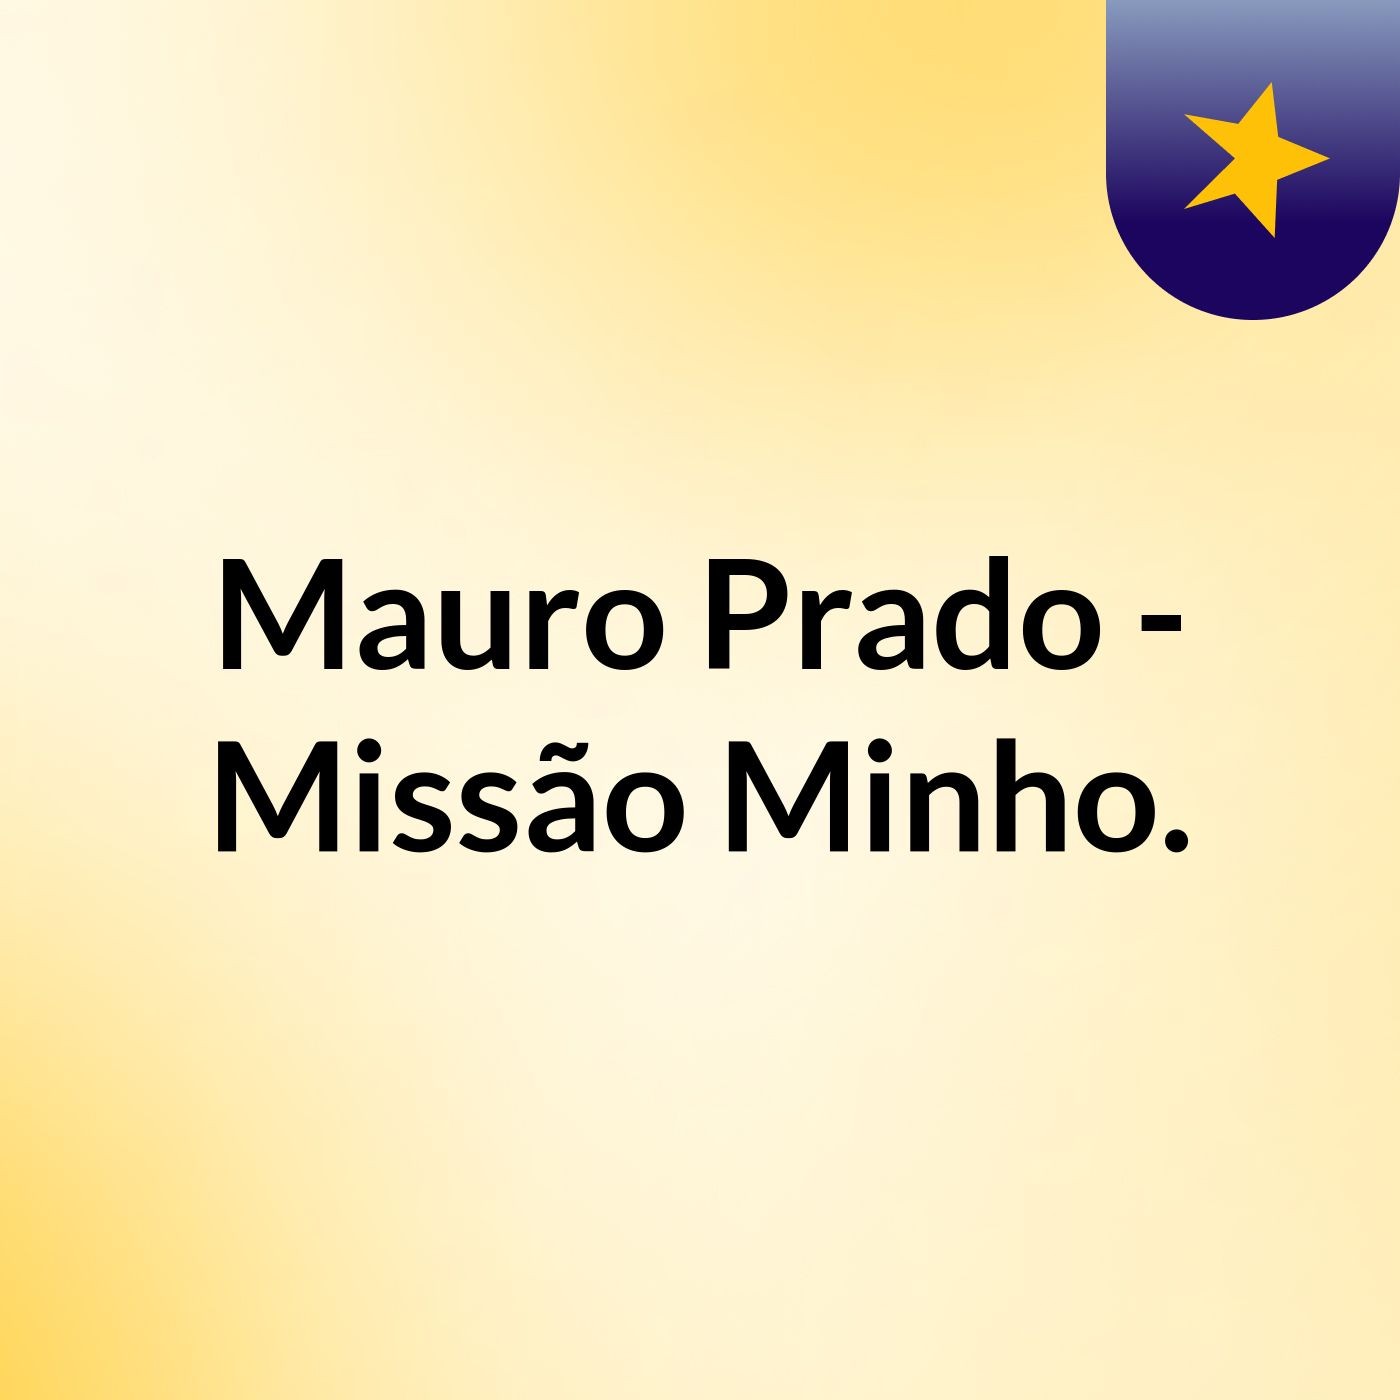 Mauro Prado - Missão Minho.